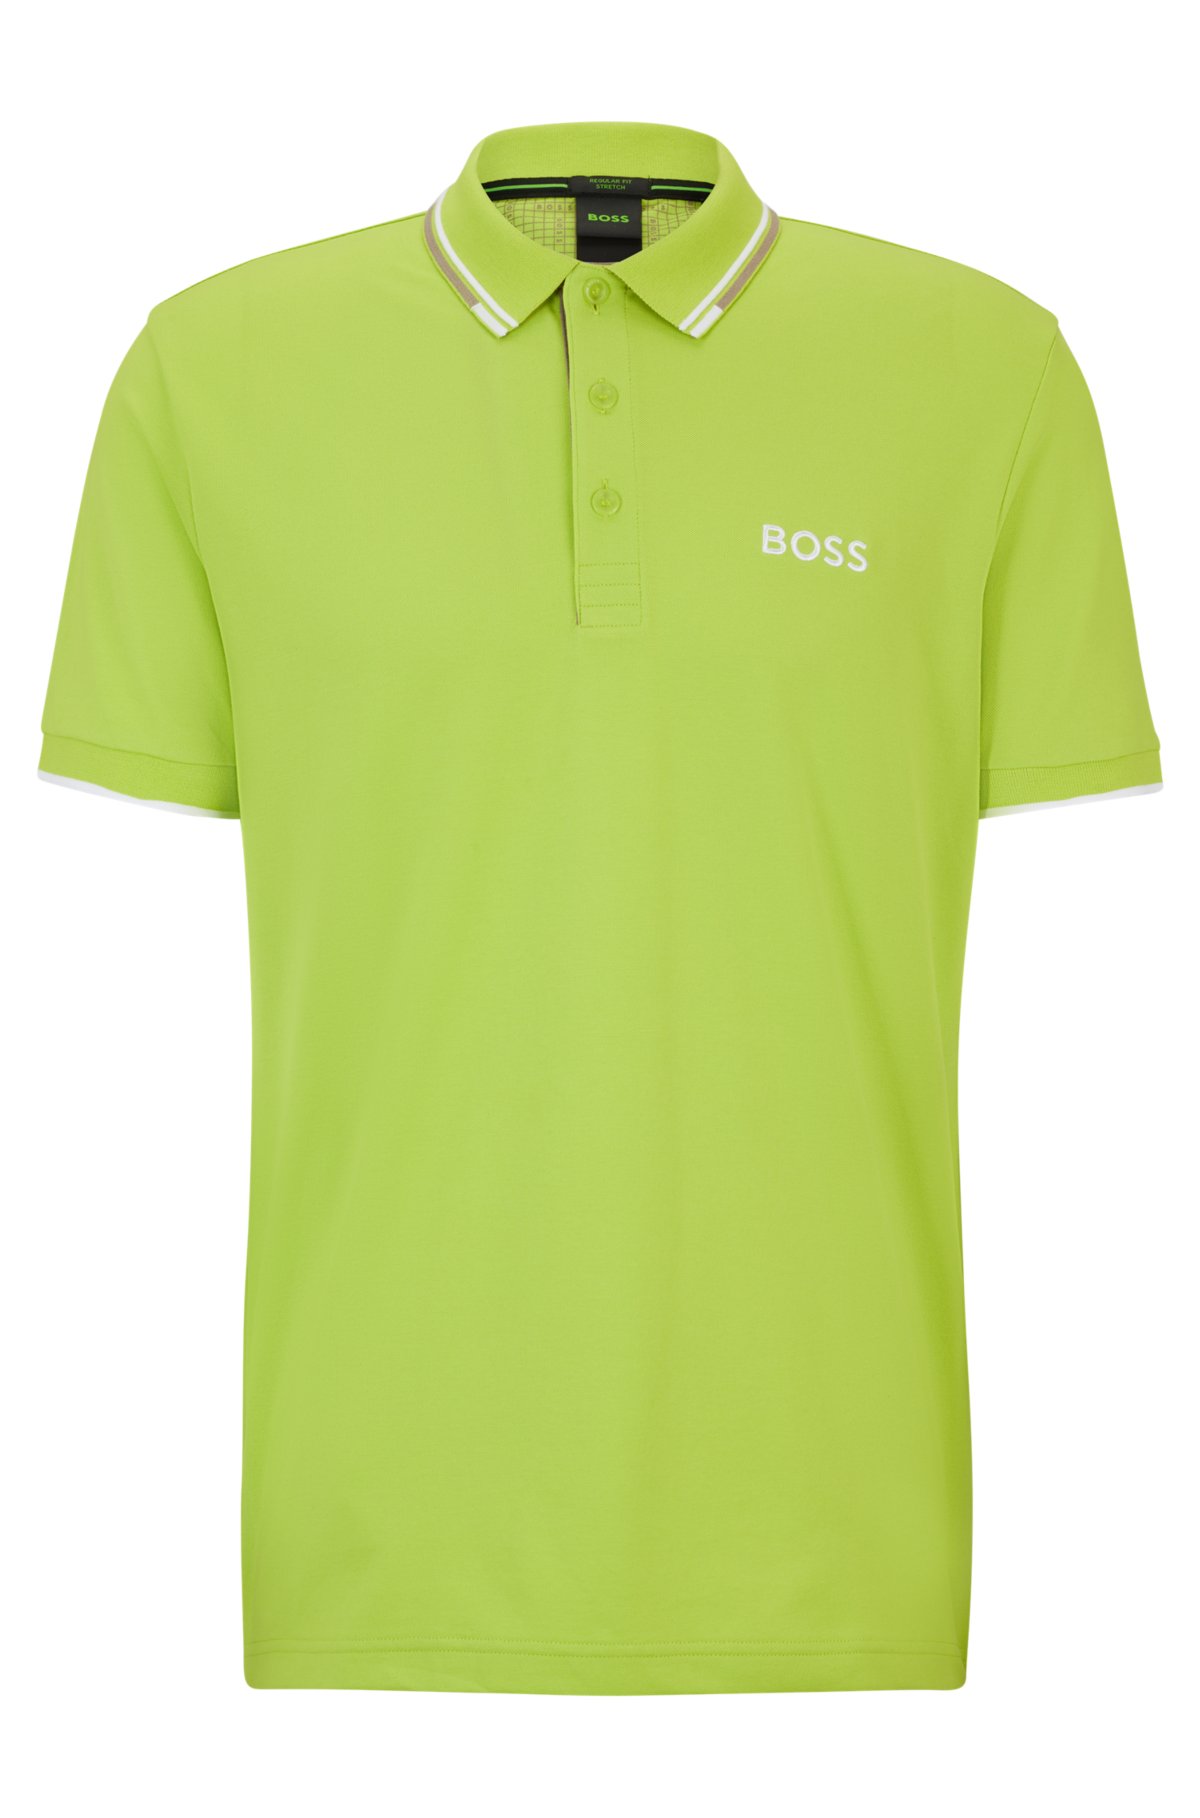 Forbløffe forbrug Clip sommerfugl BOSS - Cotton-blend polo shirt with contrast details